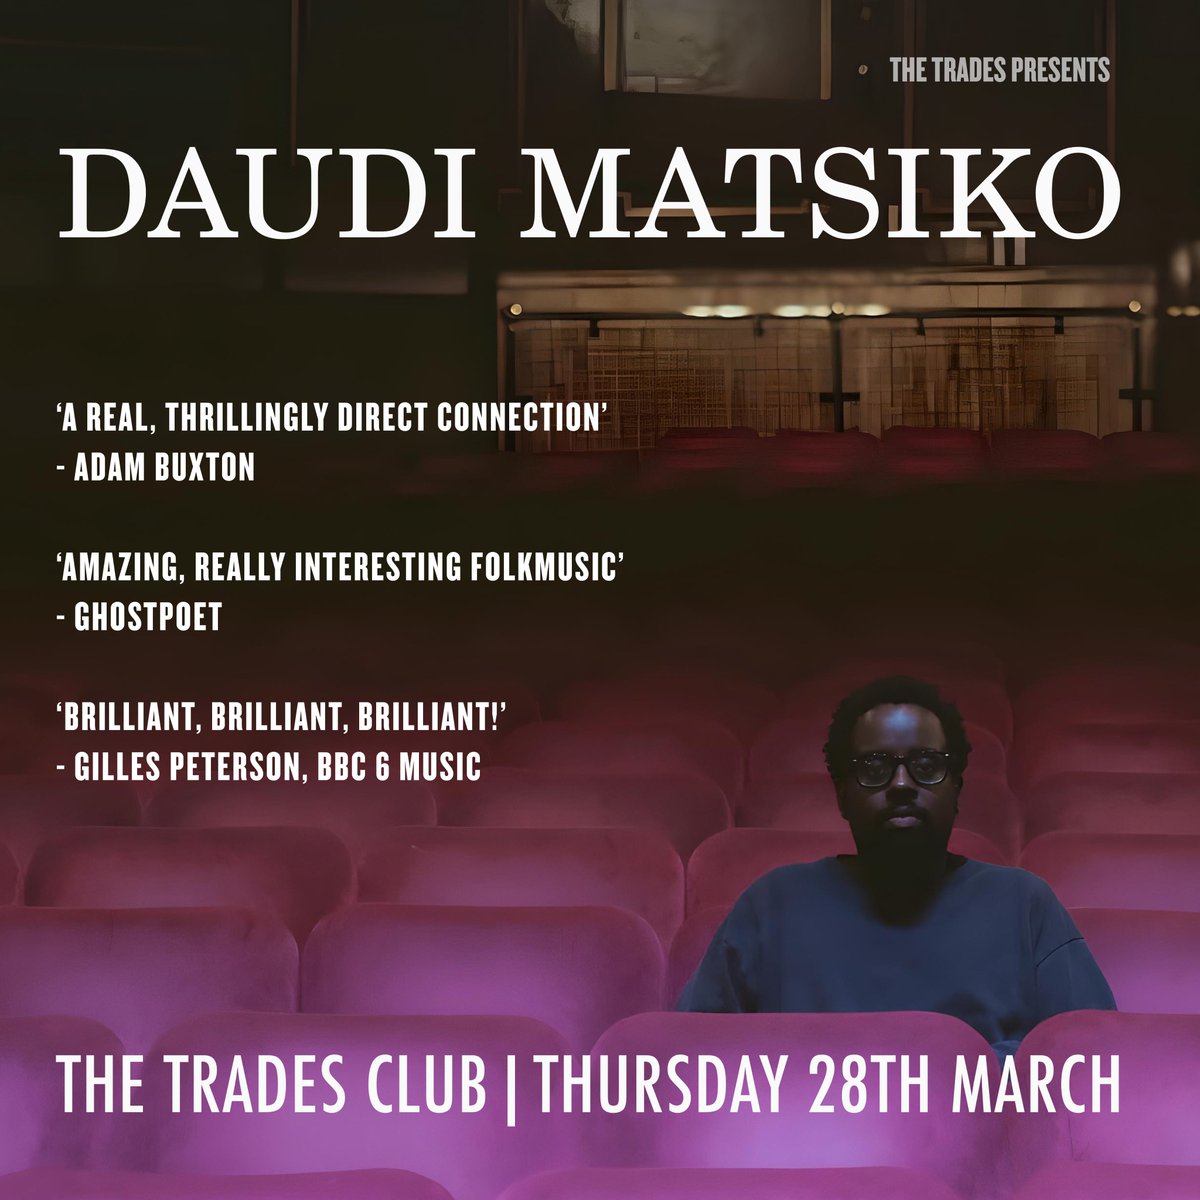 Announcing: One of our favorites - DAUDI MATSIKO @hellodaudi plays the Trades Club #hebdenbridge next month. Tickets now on sale HERE >> thetradesclub.com/events/daudi